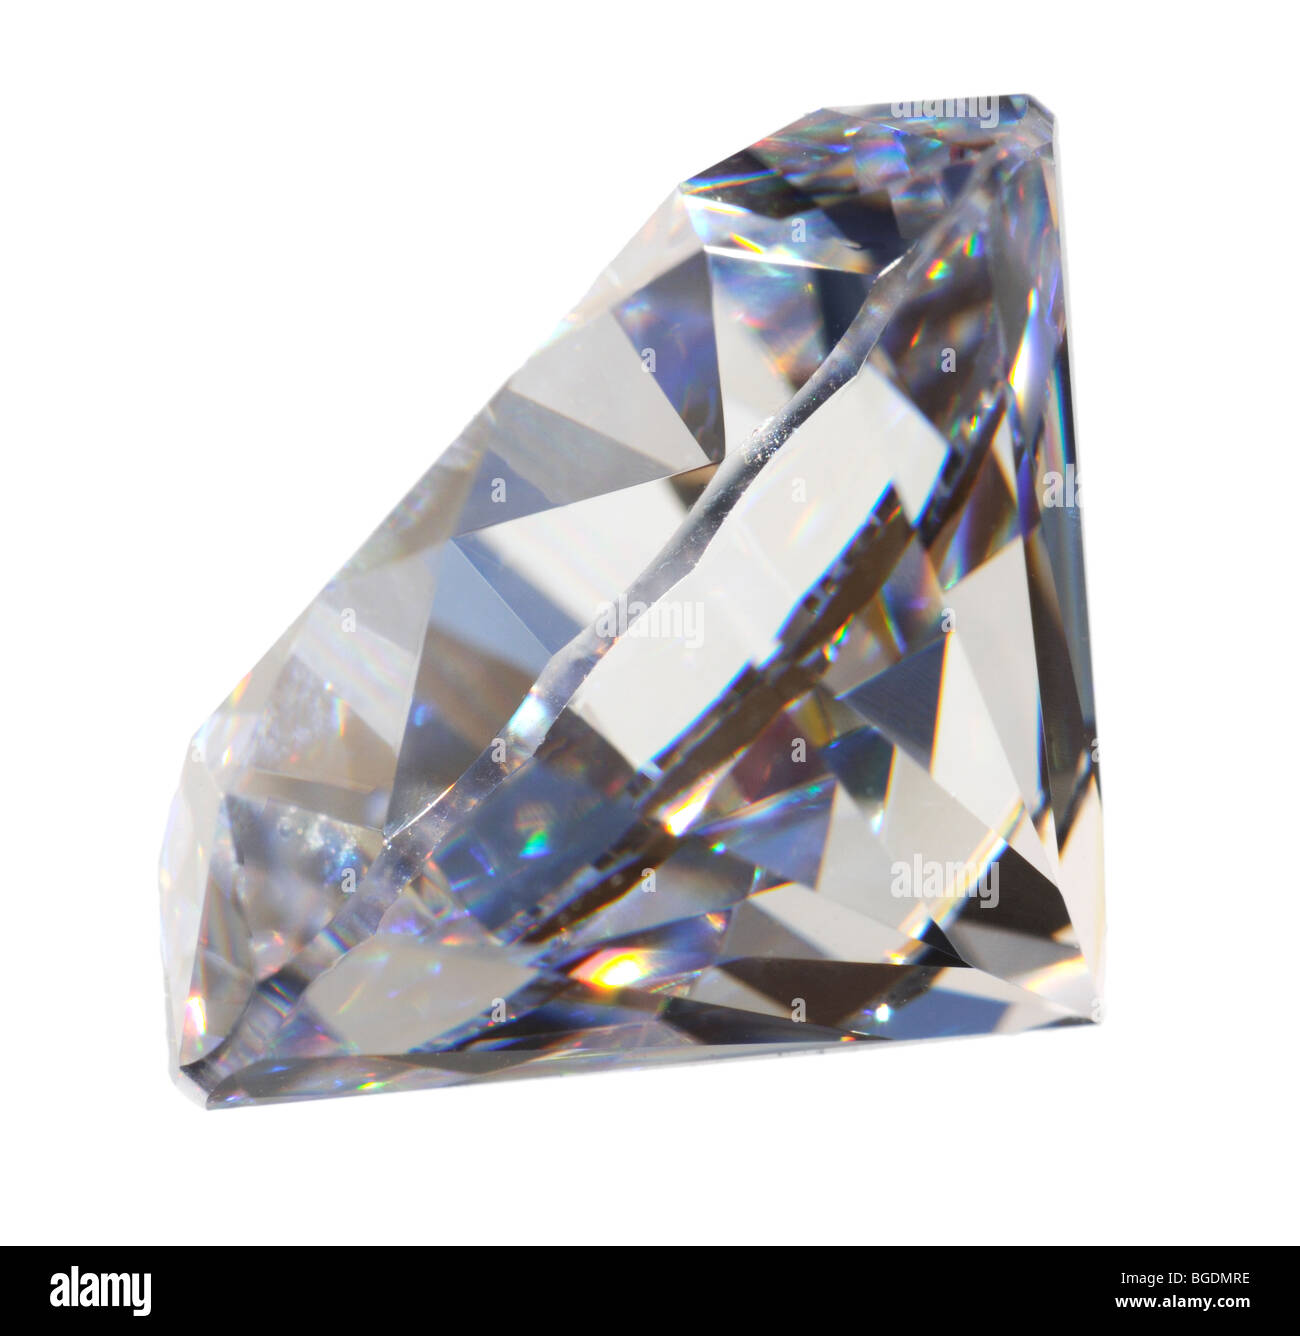 Round-cut diamond (synthetic - cubic zirconia) Stock Photo